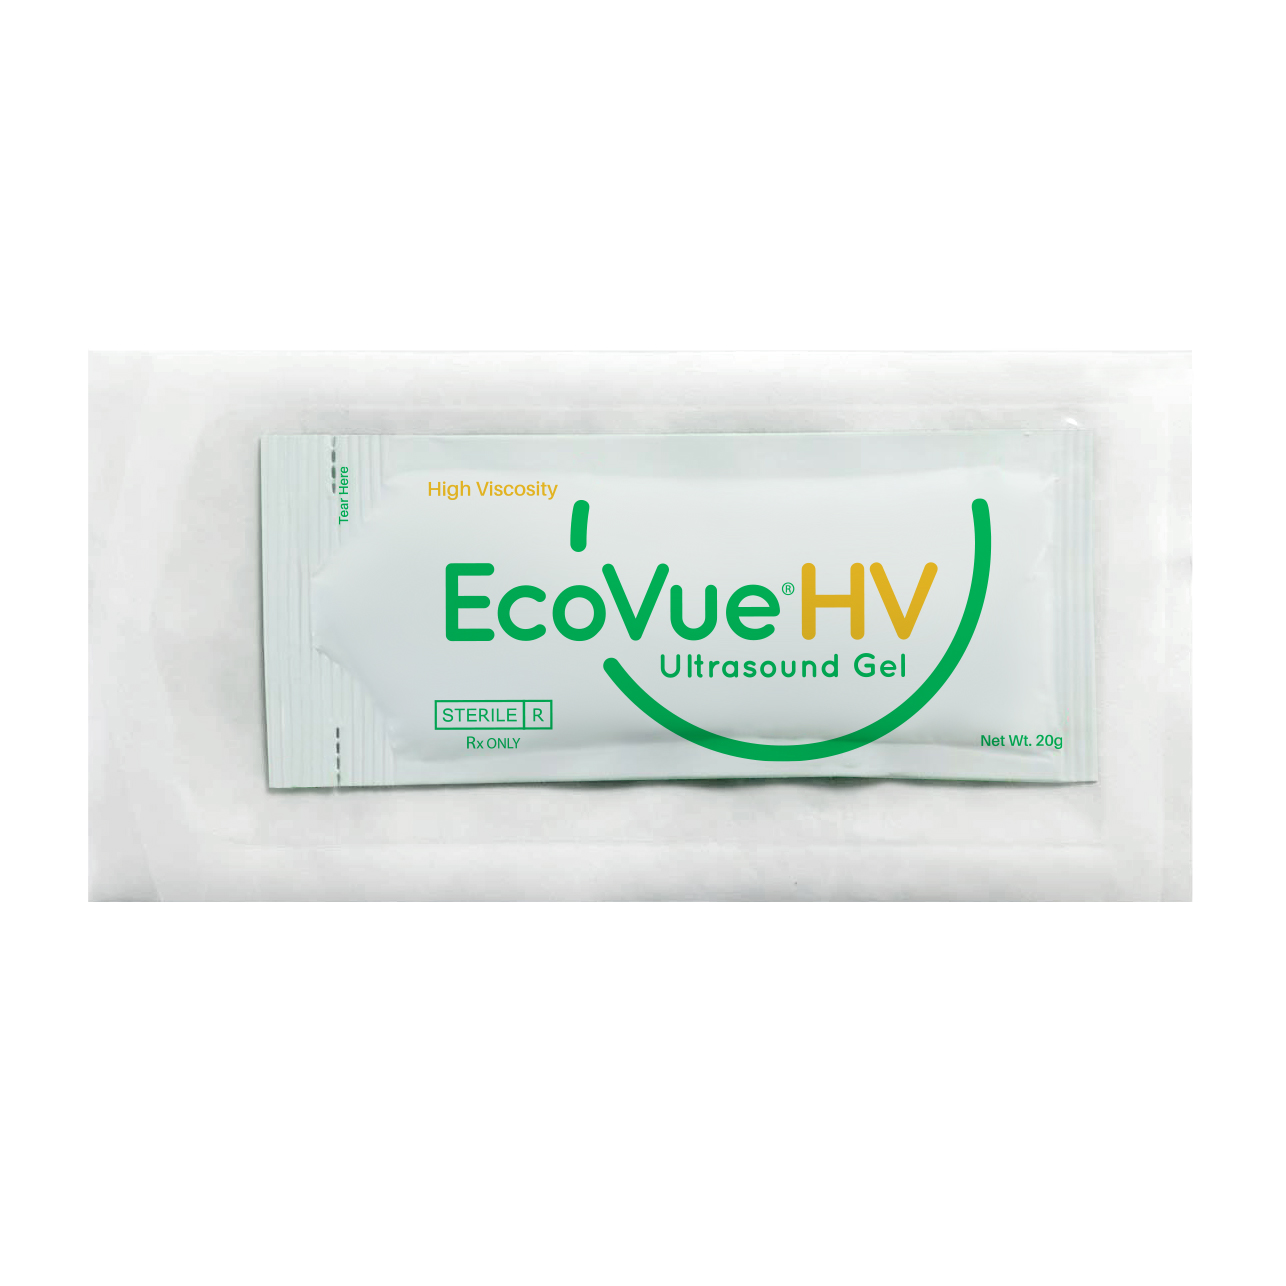 EcoVue HV 380-Packet_Safewrap.jpg